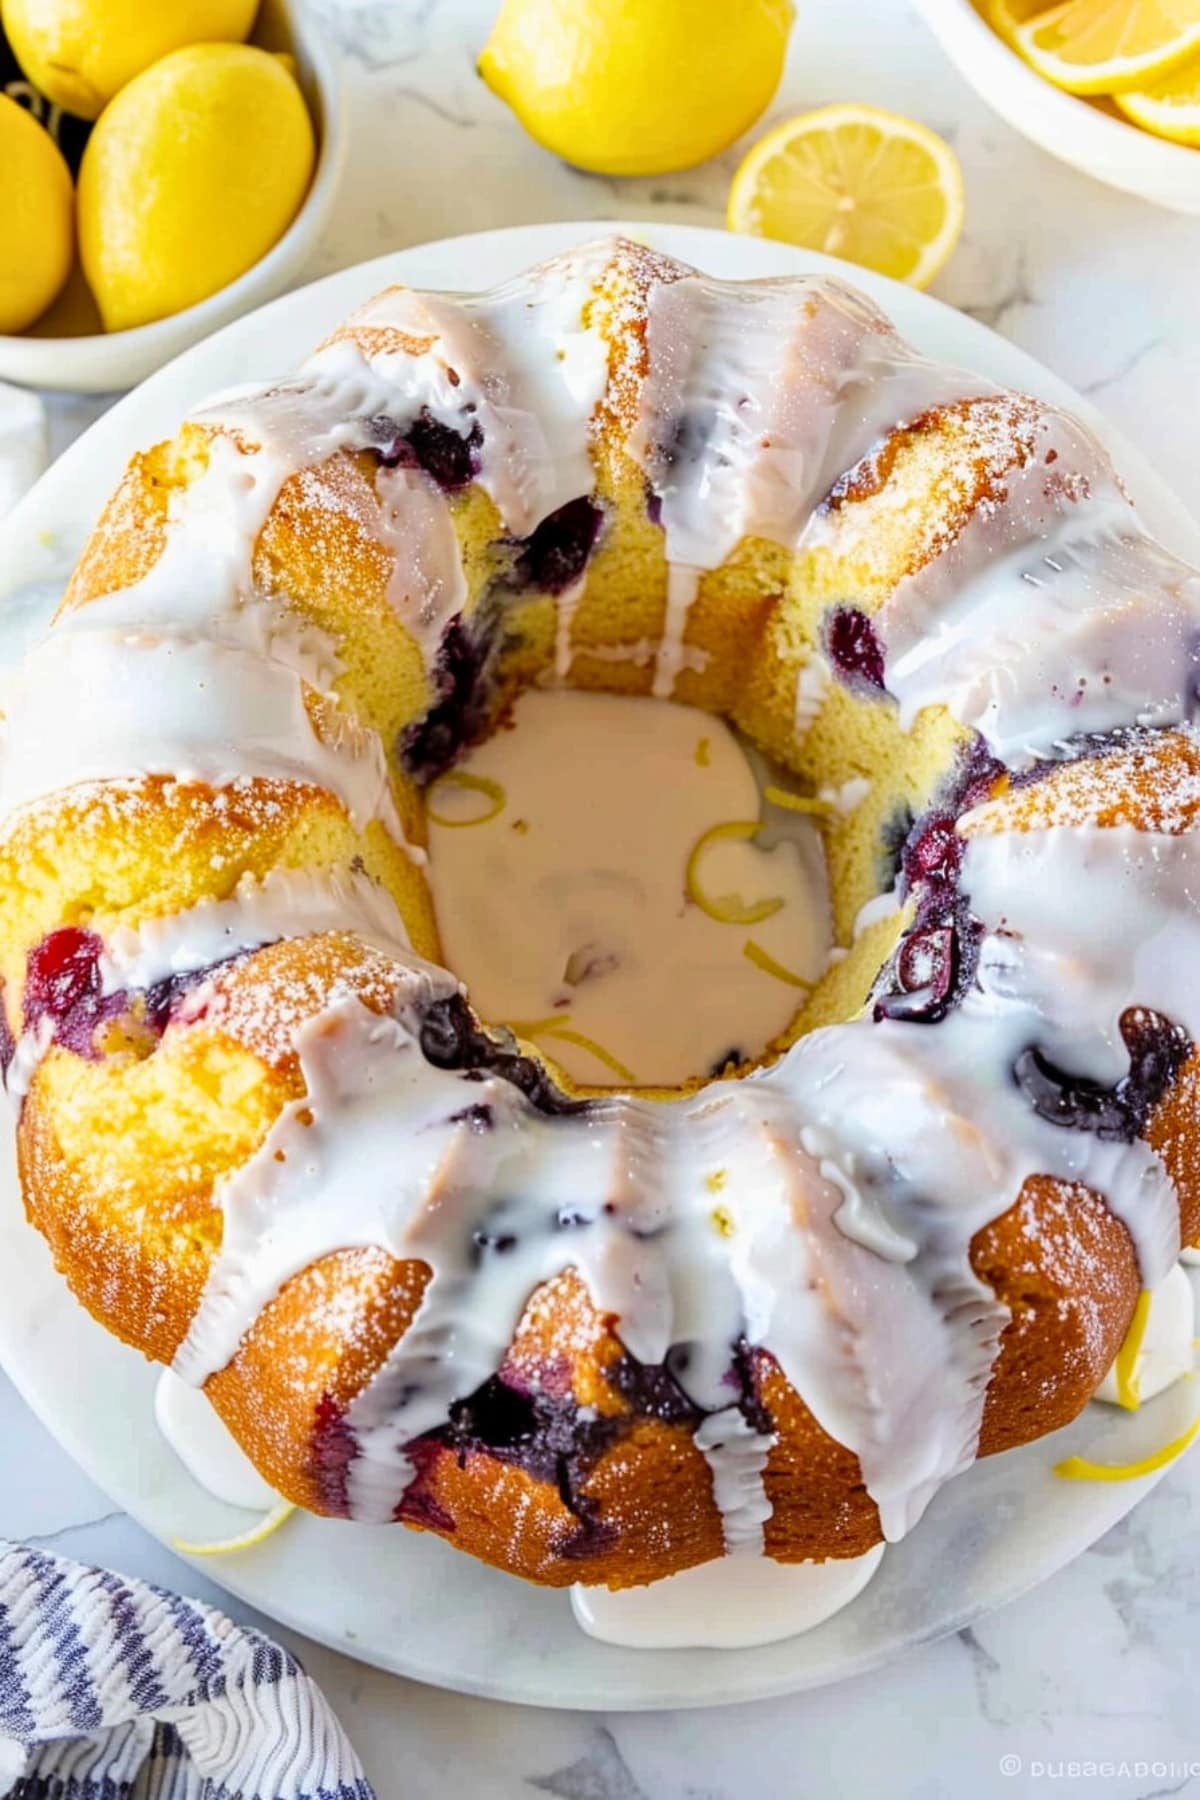 Top view of lemon blueberry pound cake with white glaze on top. 